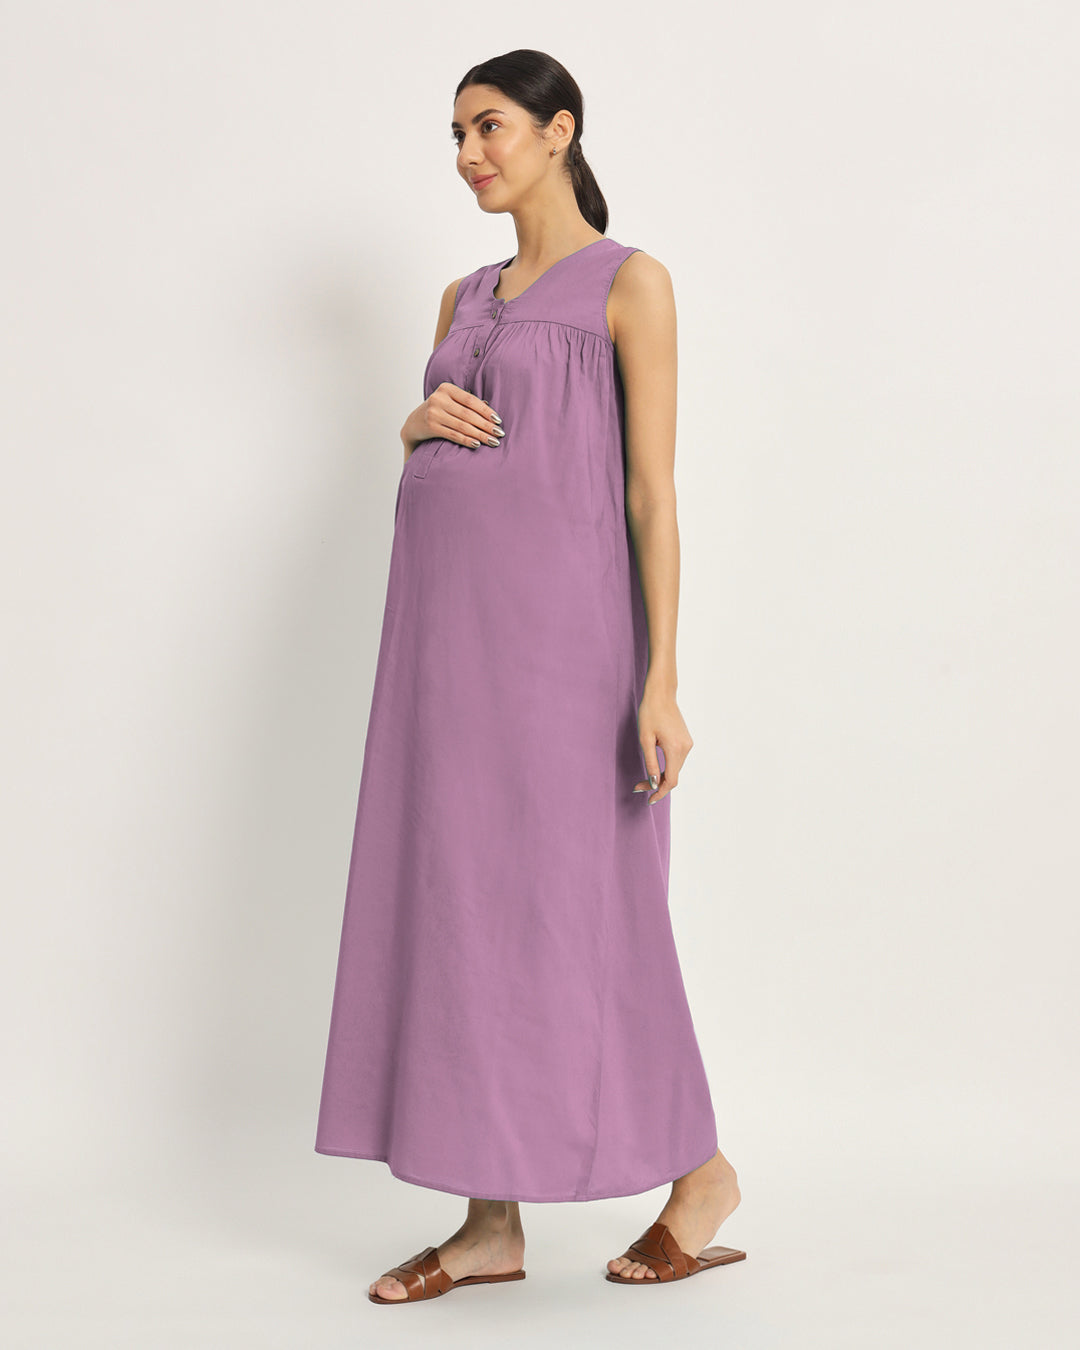 Combo: Black & Iris Pink Mommylicious Maternity & Nursing Dress